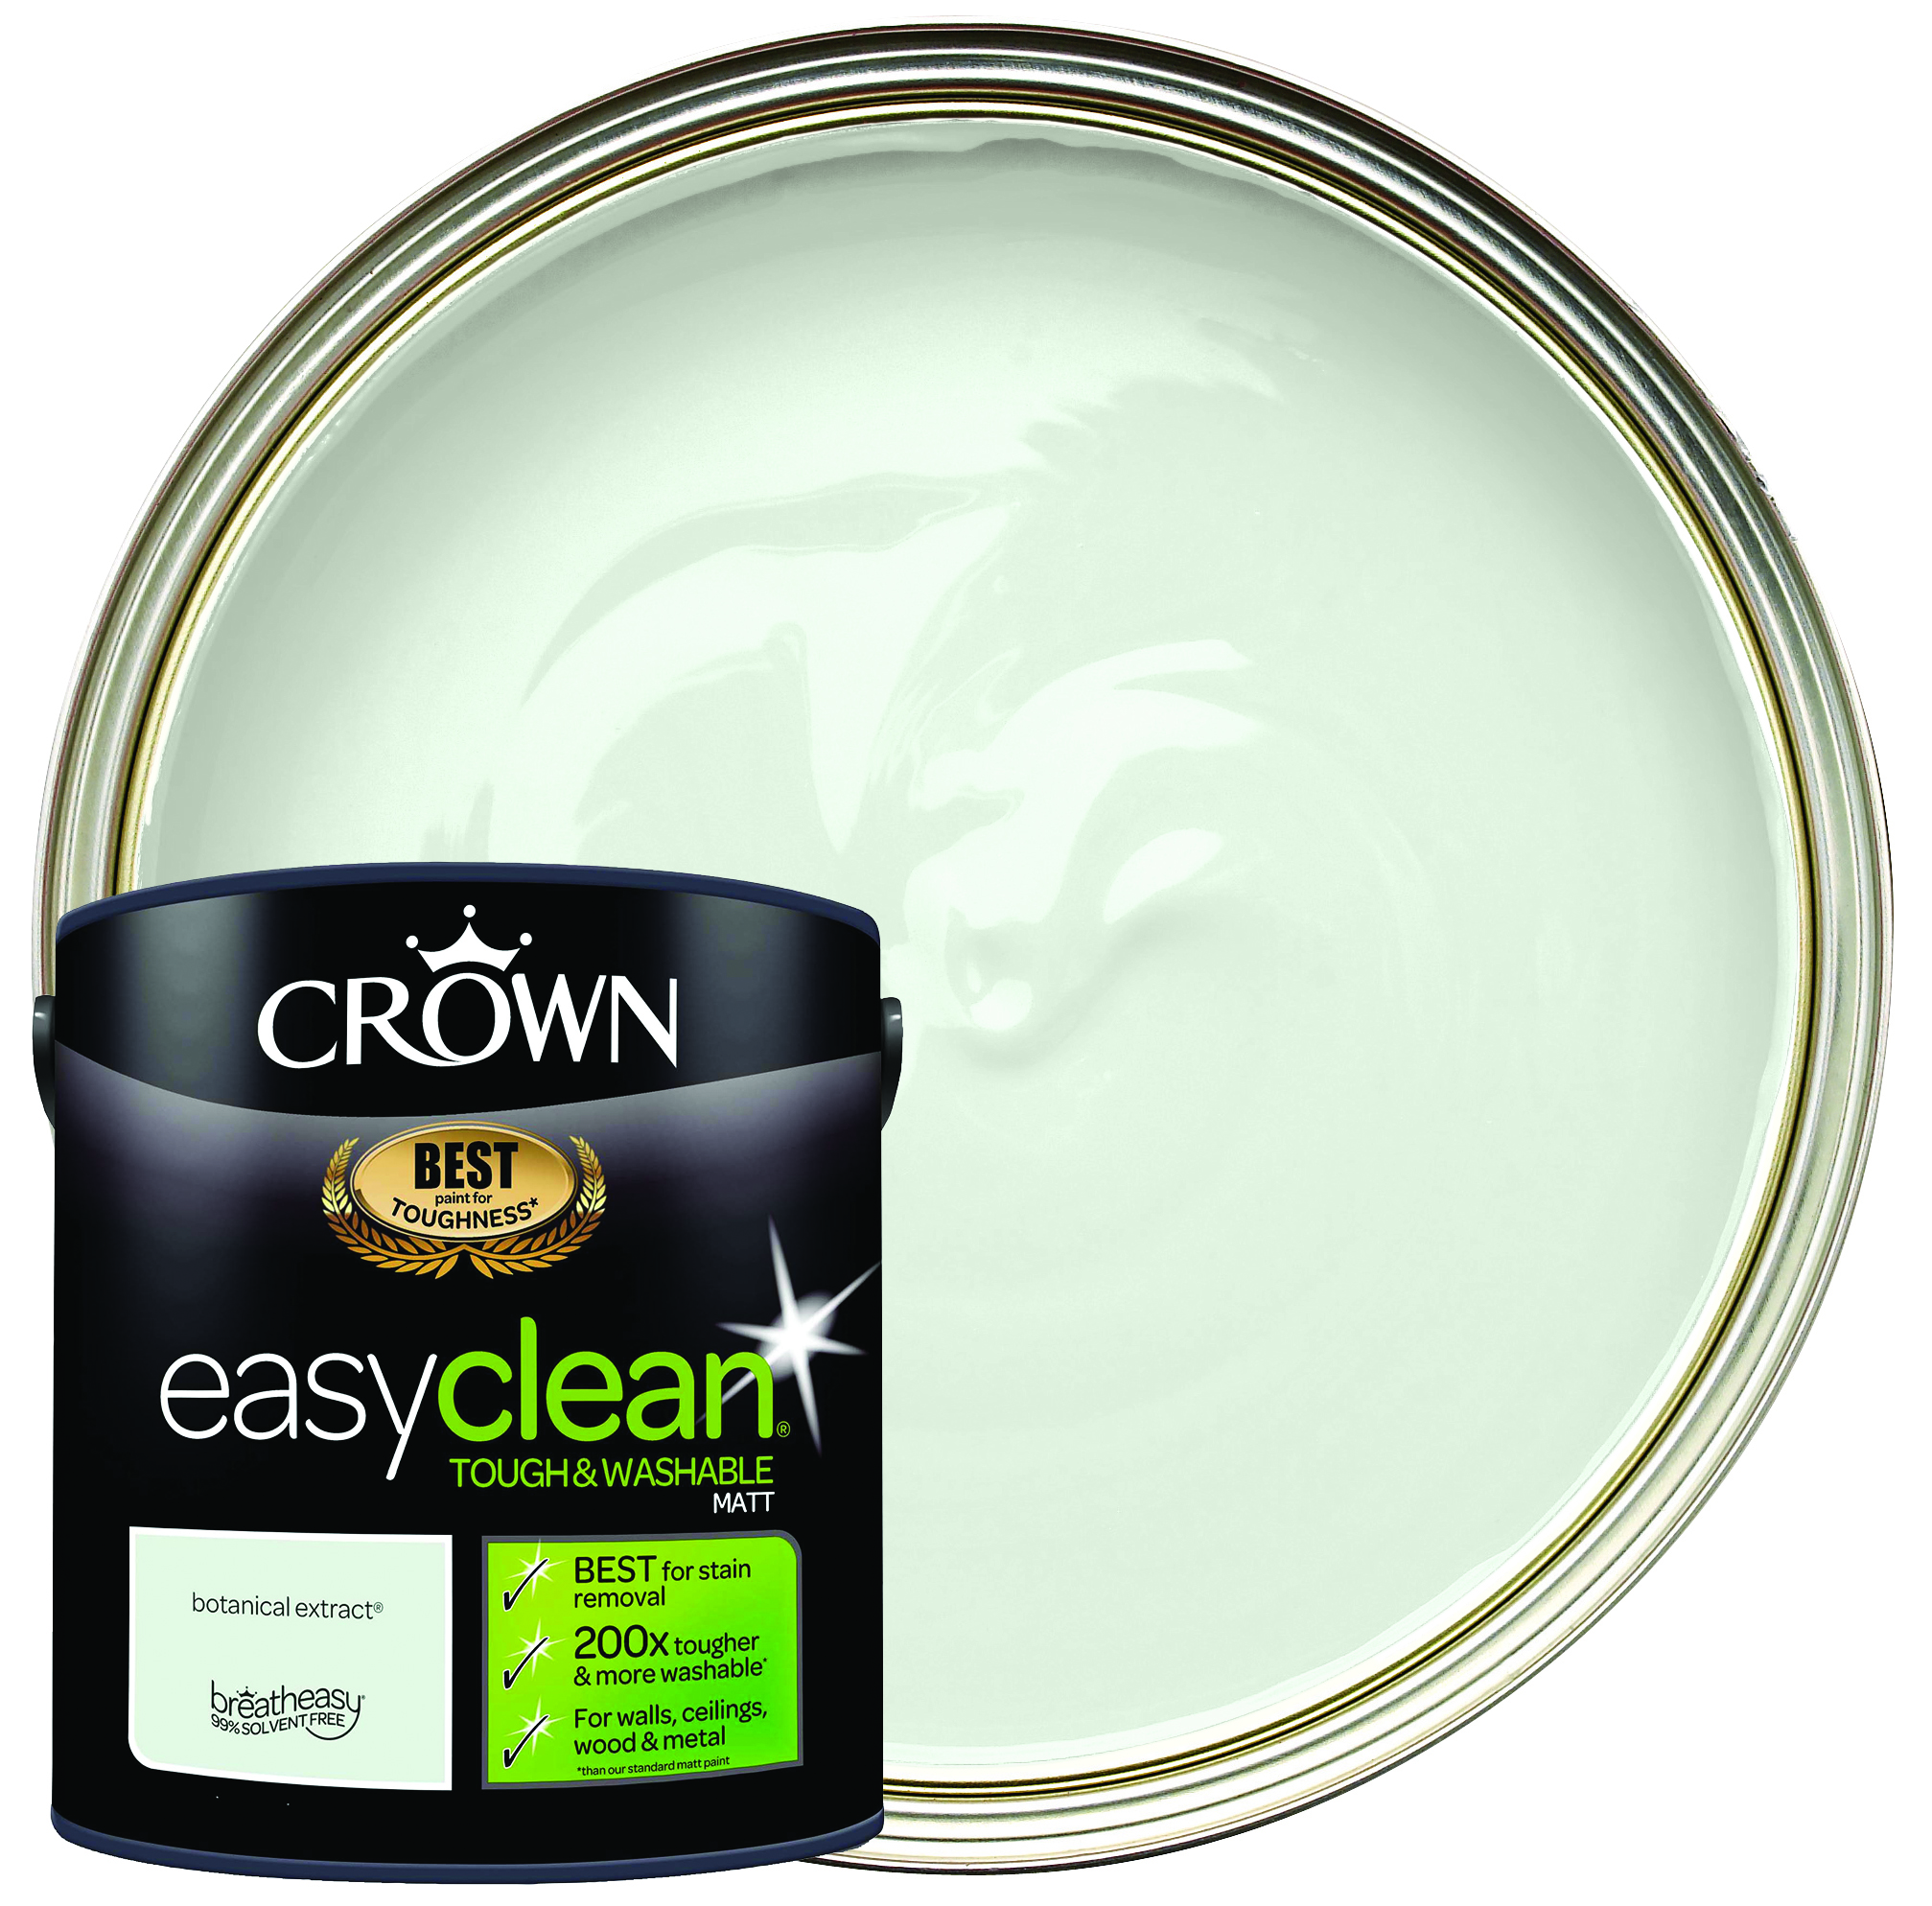 Crown Easyclean Matt Emulsion Paint - Botanical Extract - 2.5L